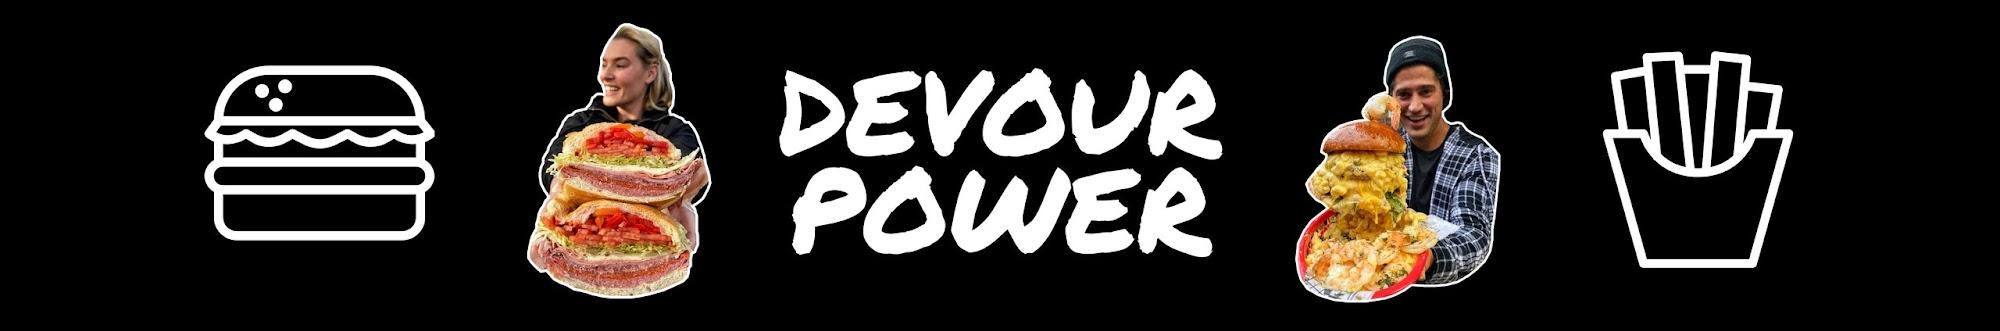 Devour Power TV